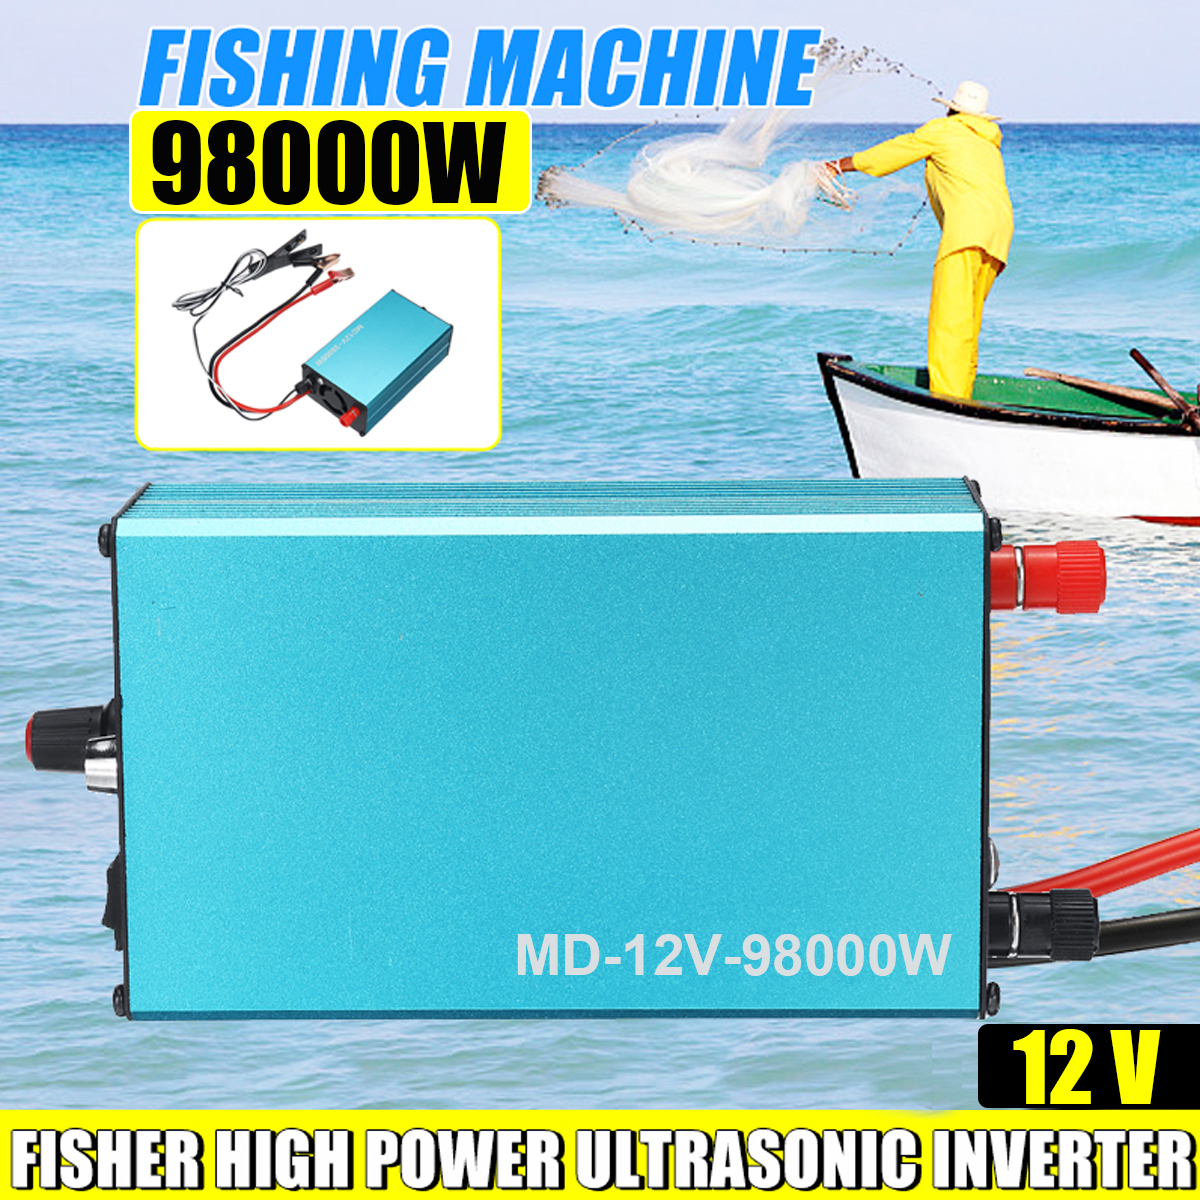 98000W DC12V Ultrasonic Inverter Electric Fisher High Power